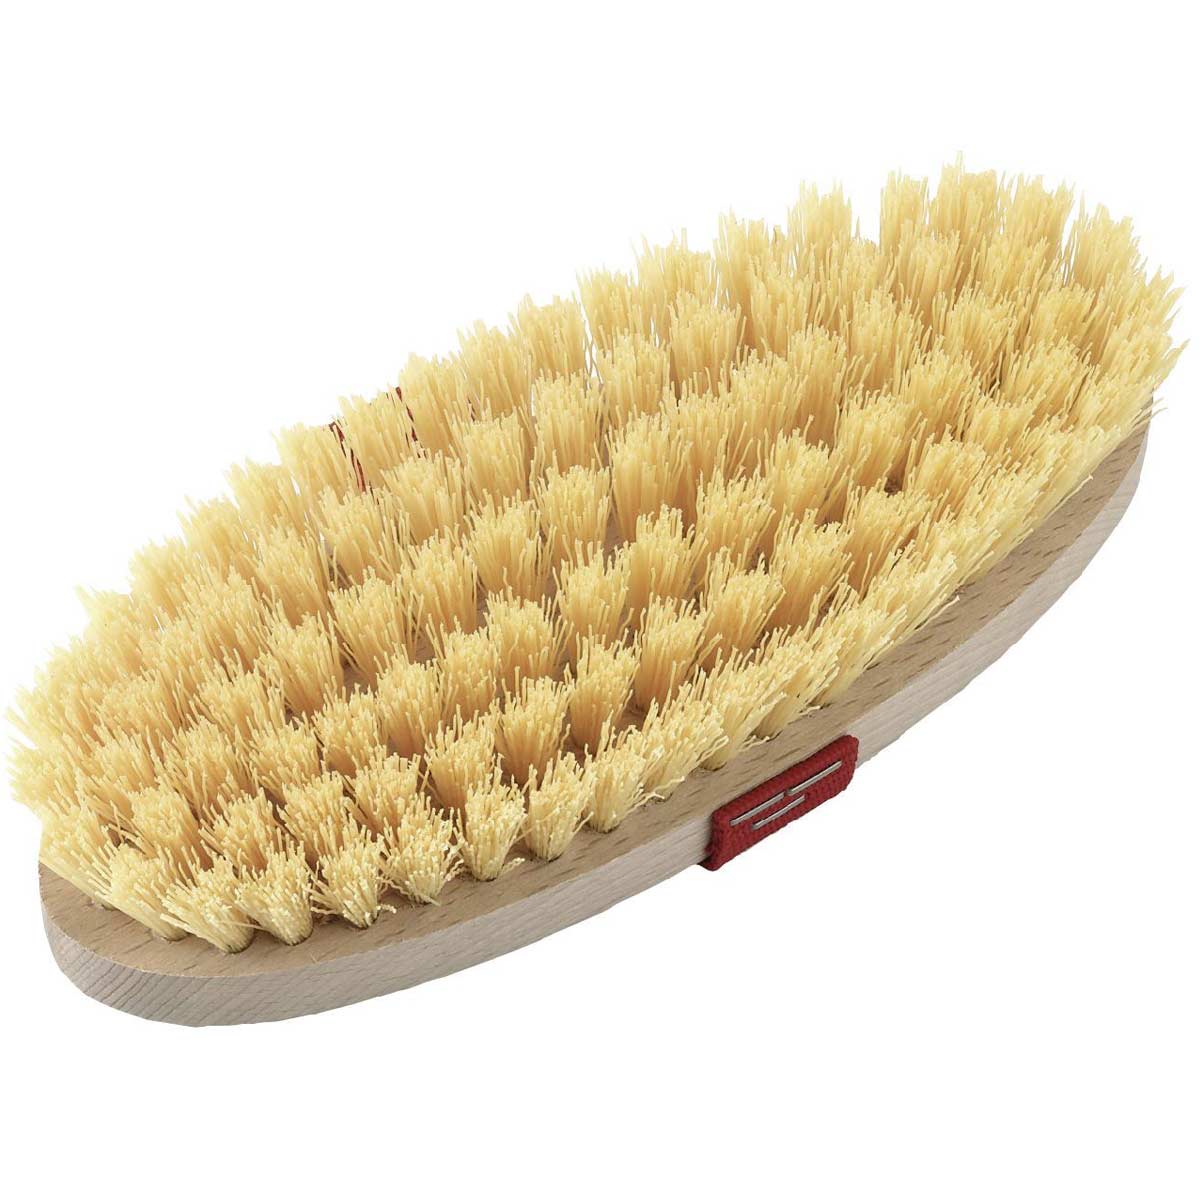 Grooming Brush with nylon bristles